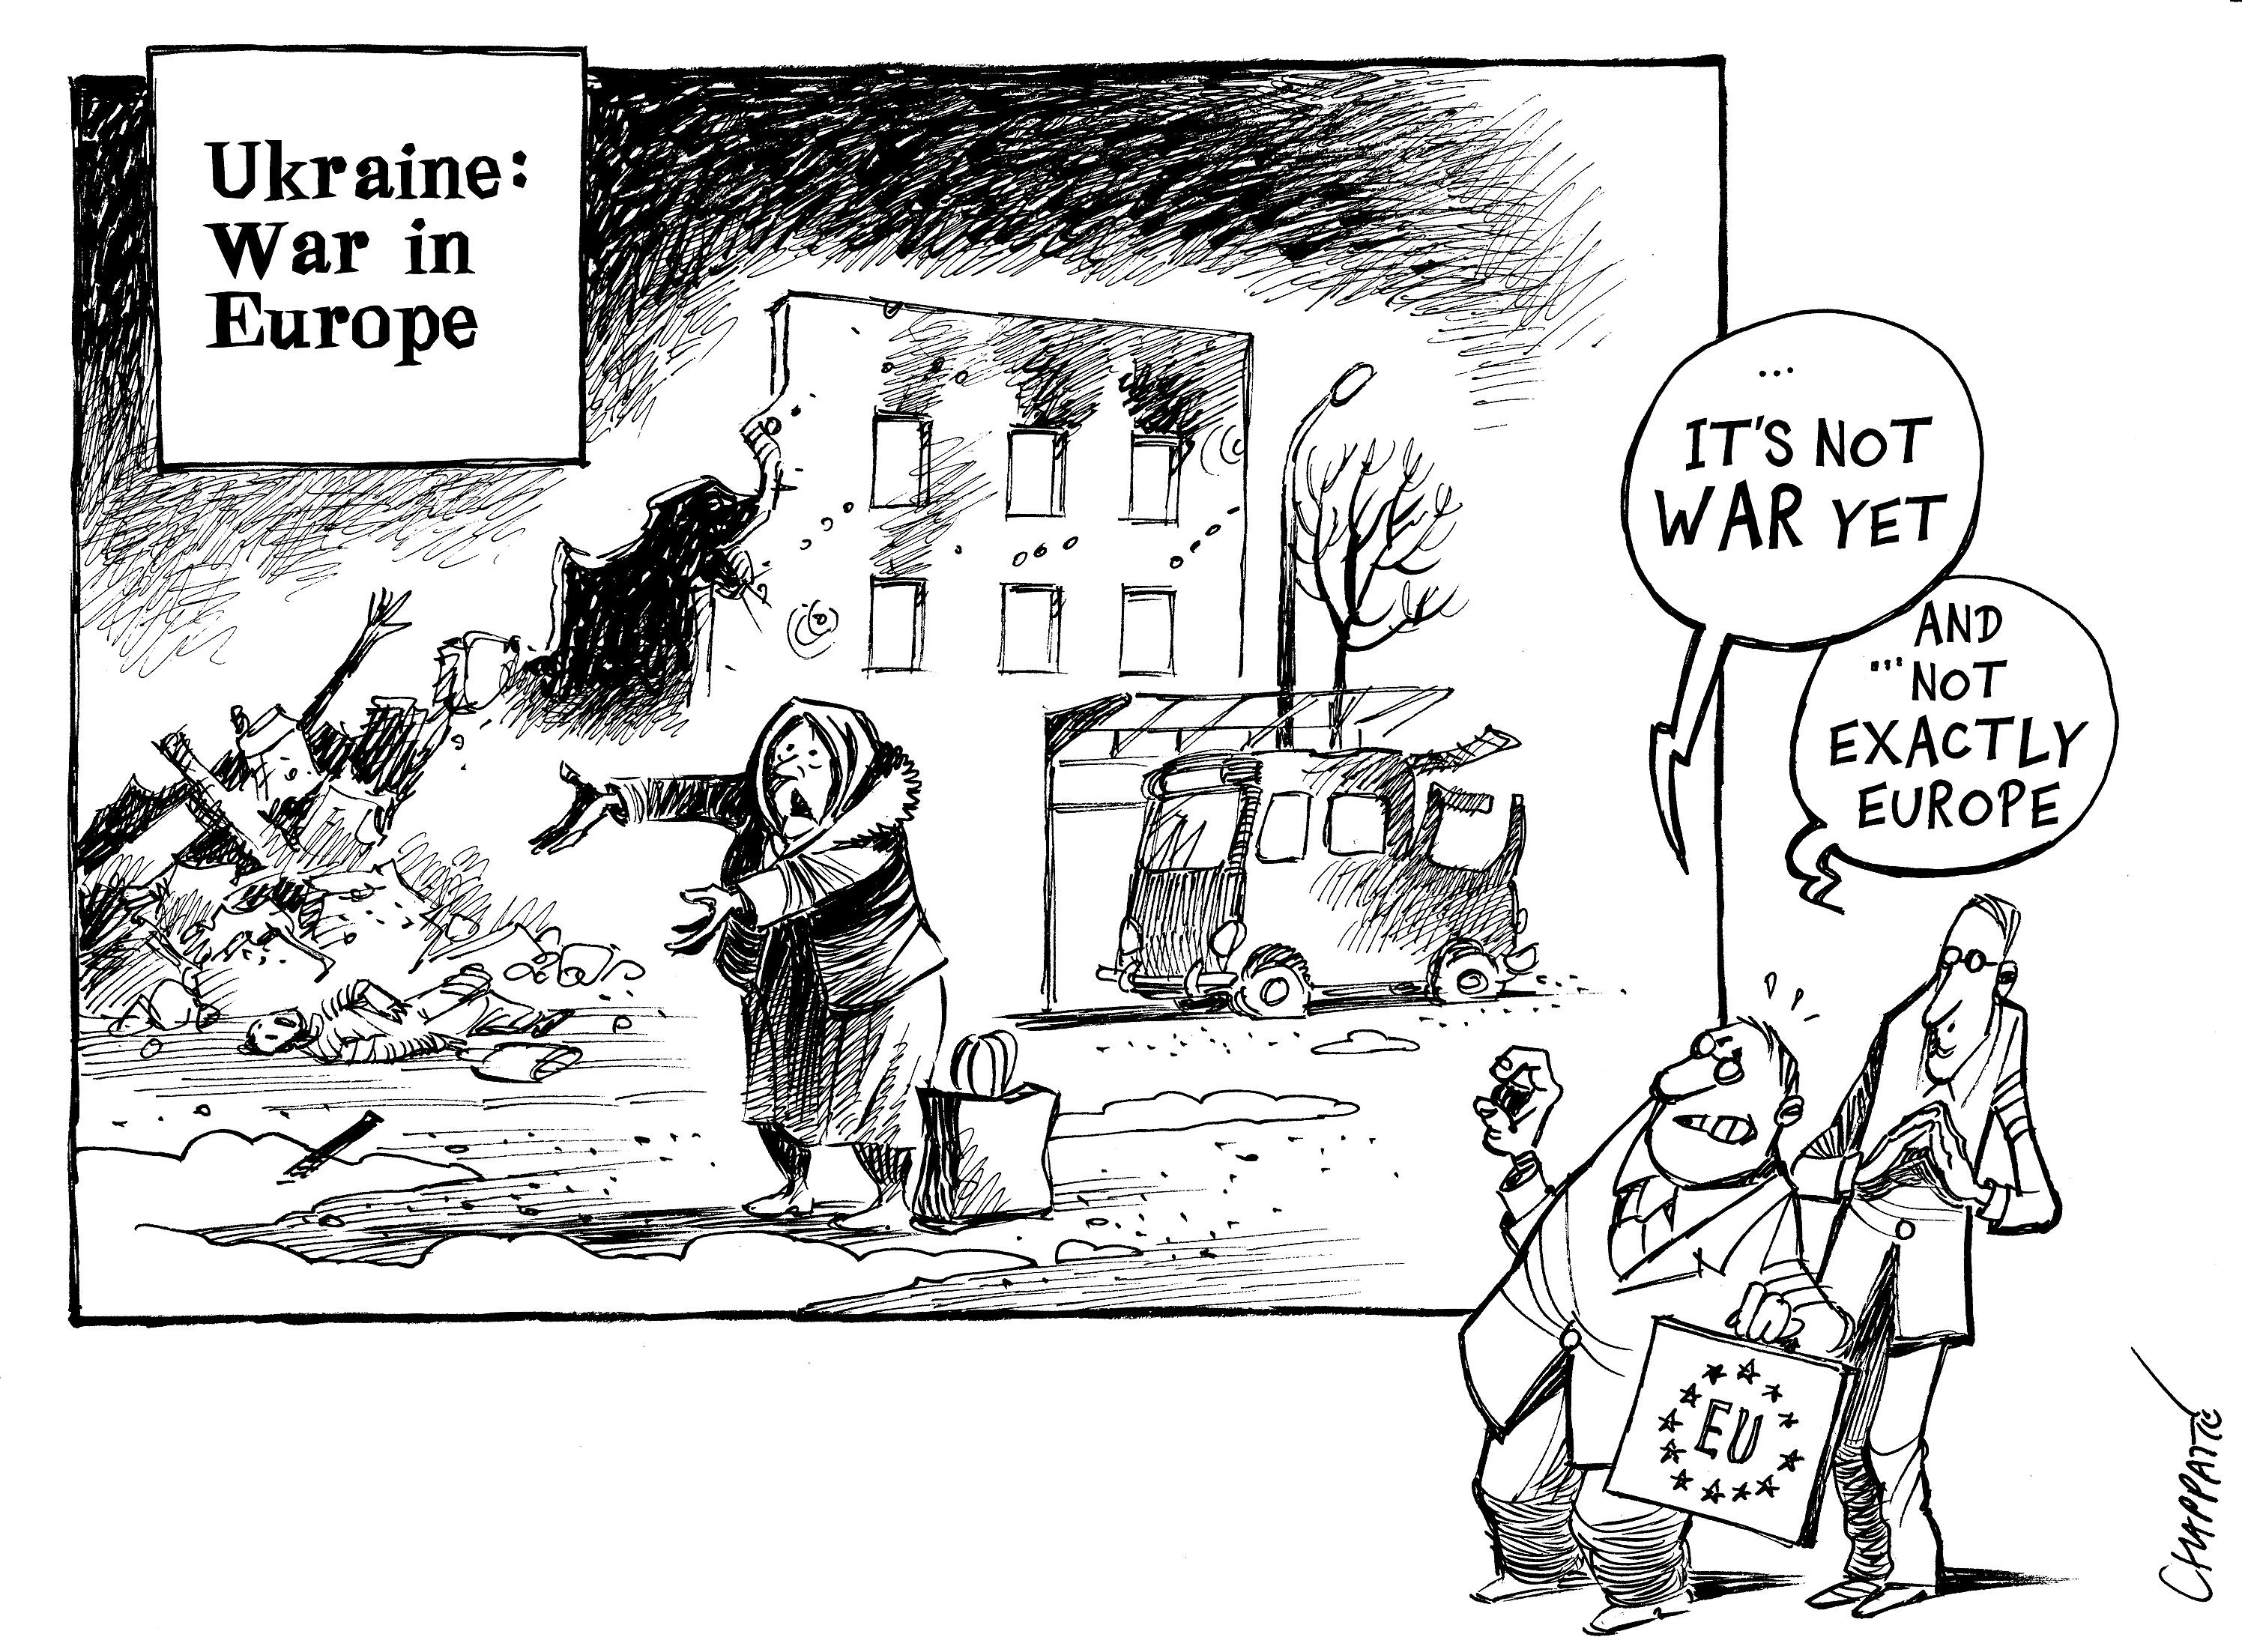 Ukraine and Europe